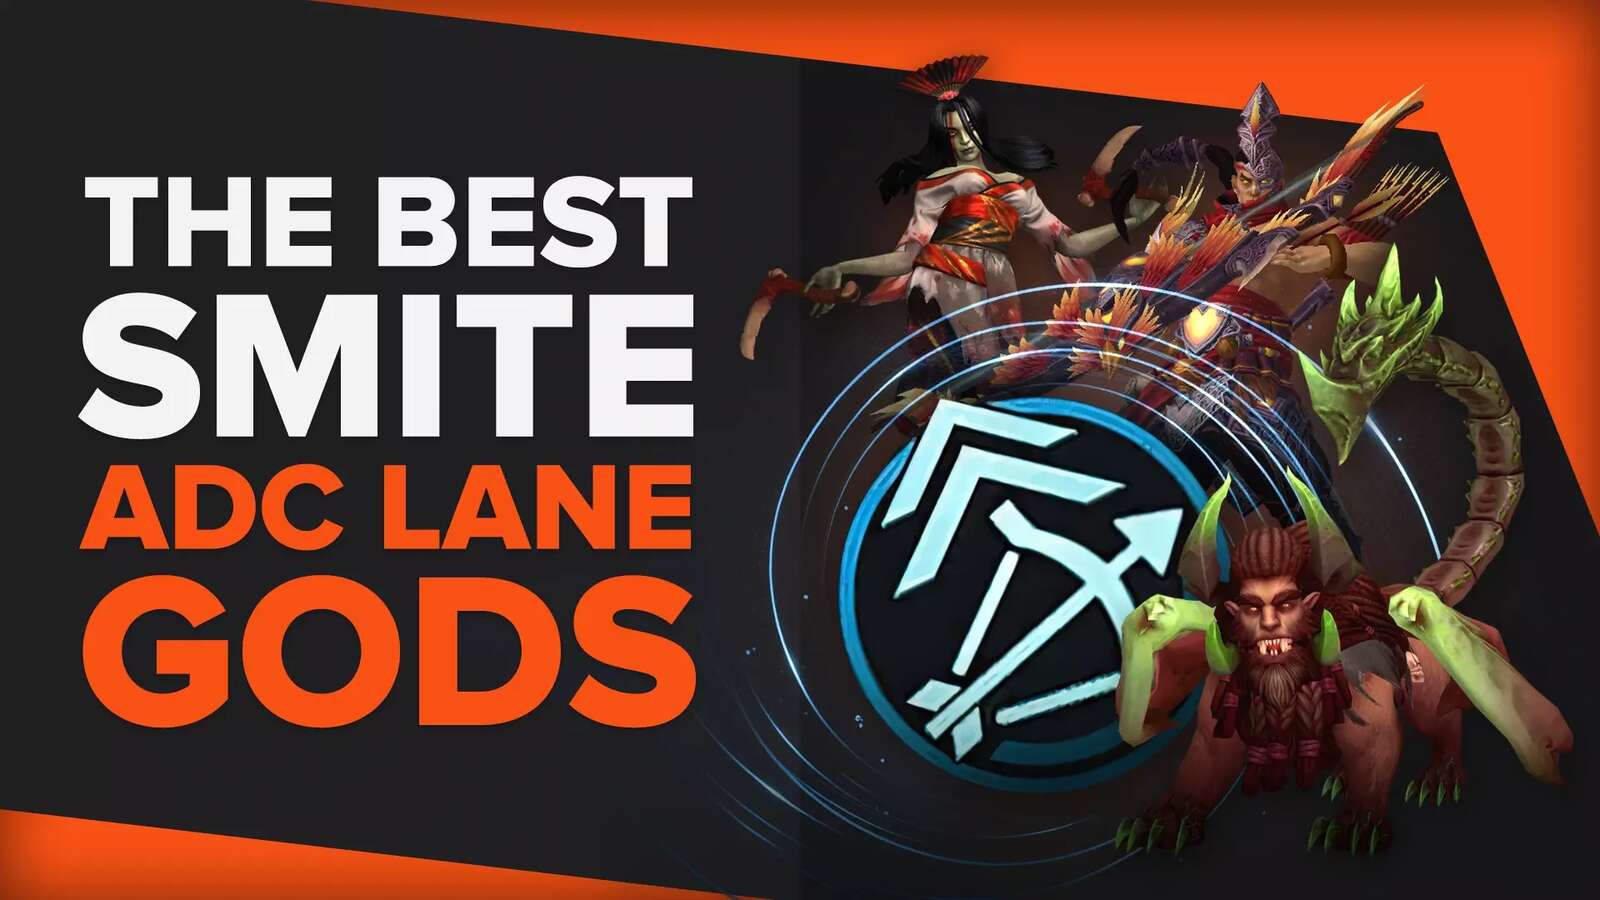 6 Best ADC Lane Smite Gods [Ranked]